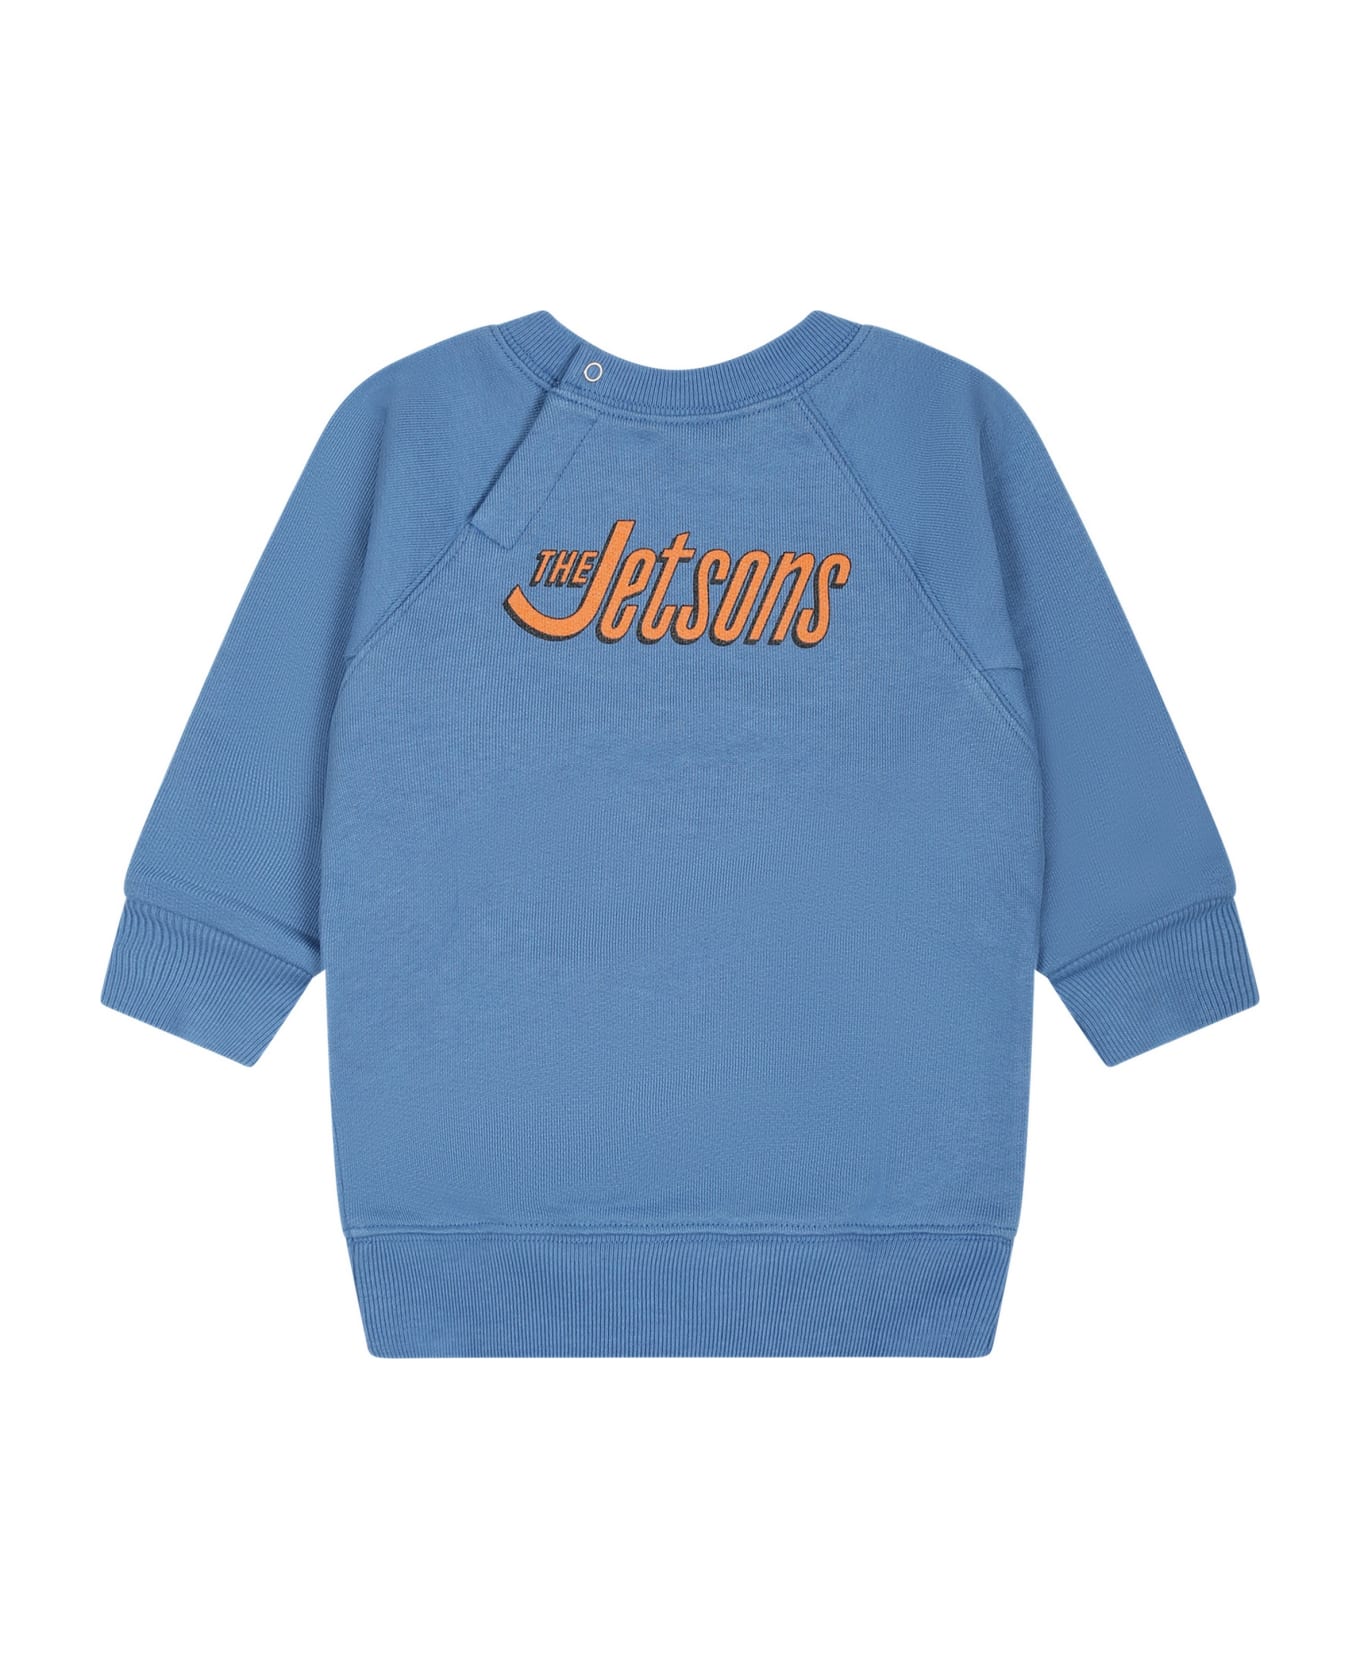 Gucci Light Blue Sweatshirt For Baby Kids With Print And Logo - Light Blue ニットウェア＆スウェットシャツ